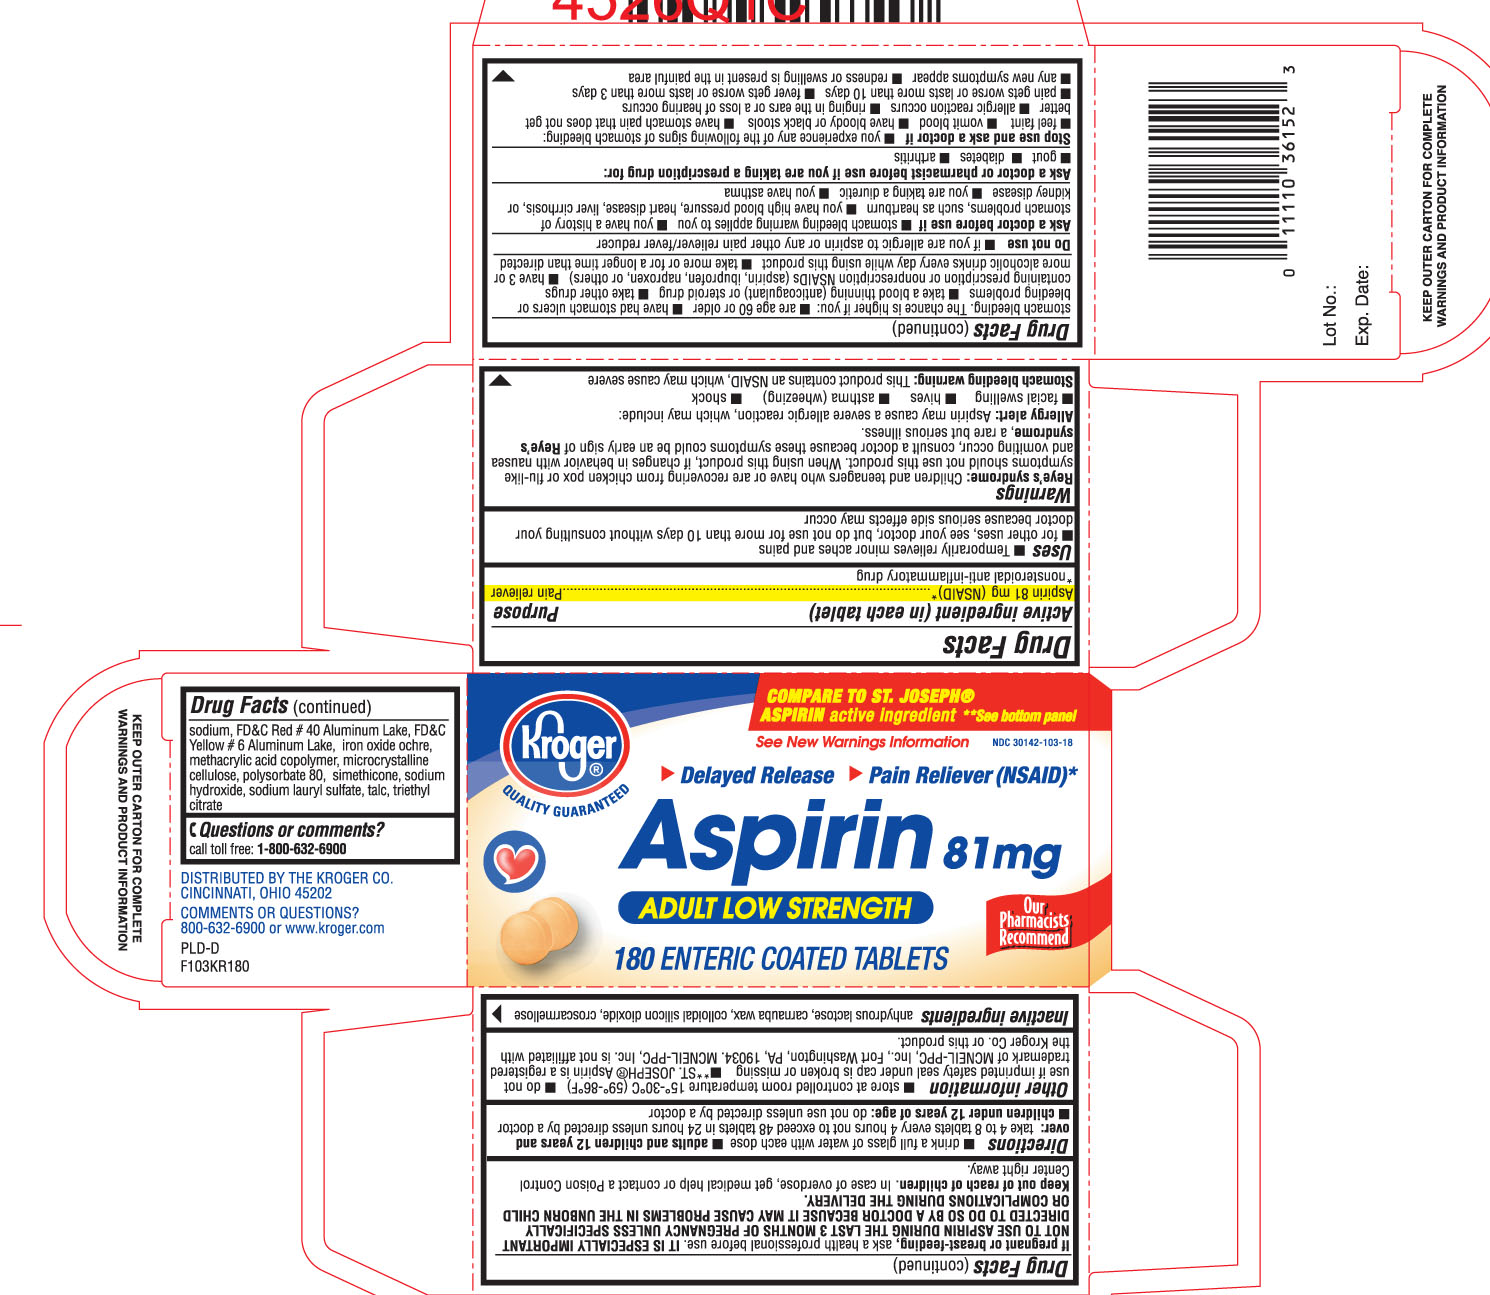 kroger aspirin 81 mg 180 count